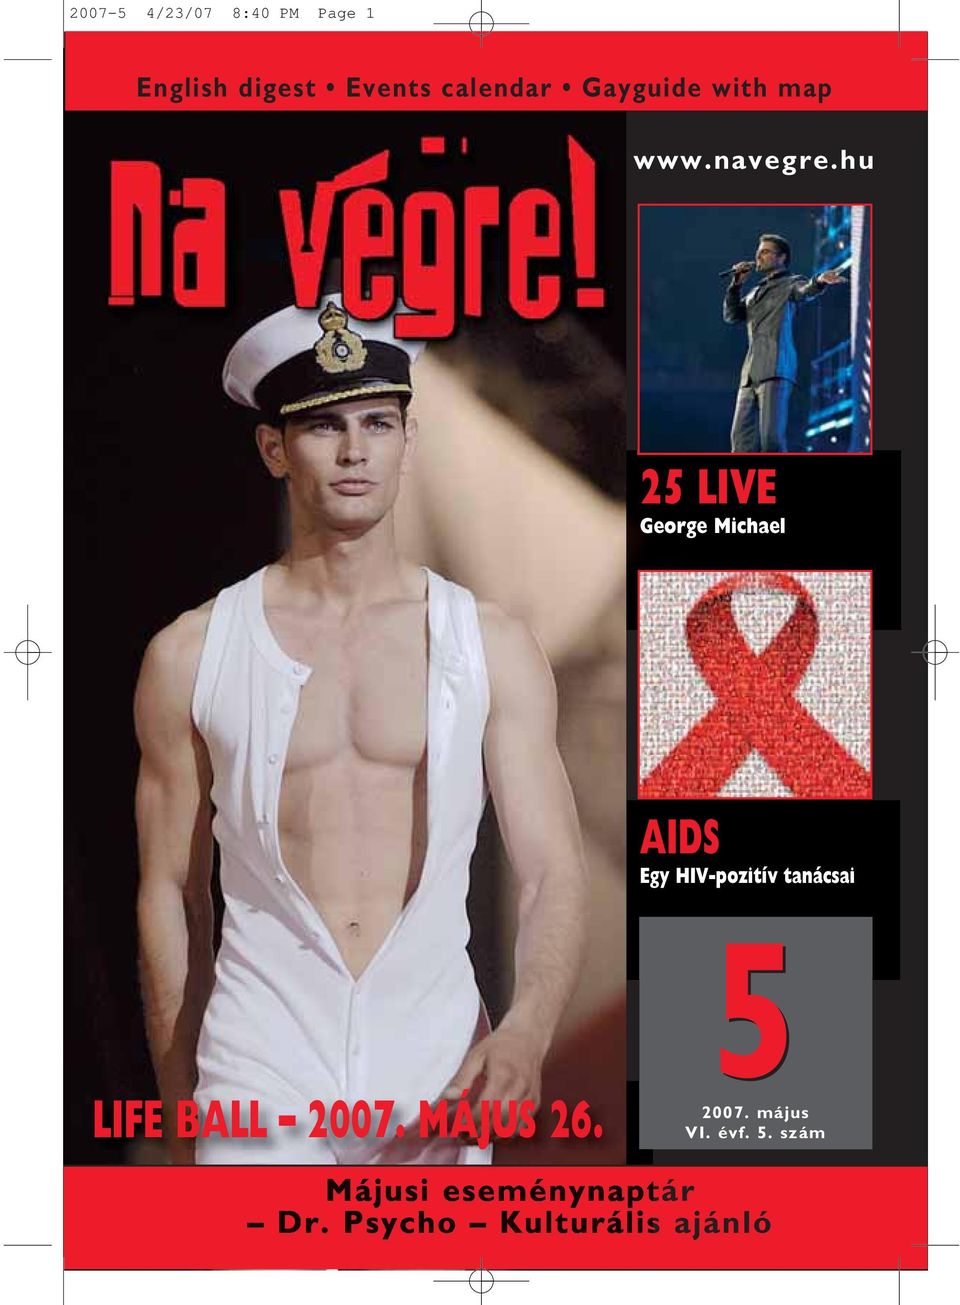 hu 25 LIVE George Michael AIDS Egy HIV-pozitív tanácsai 5 LIFE